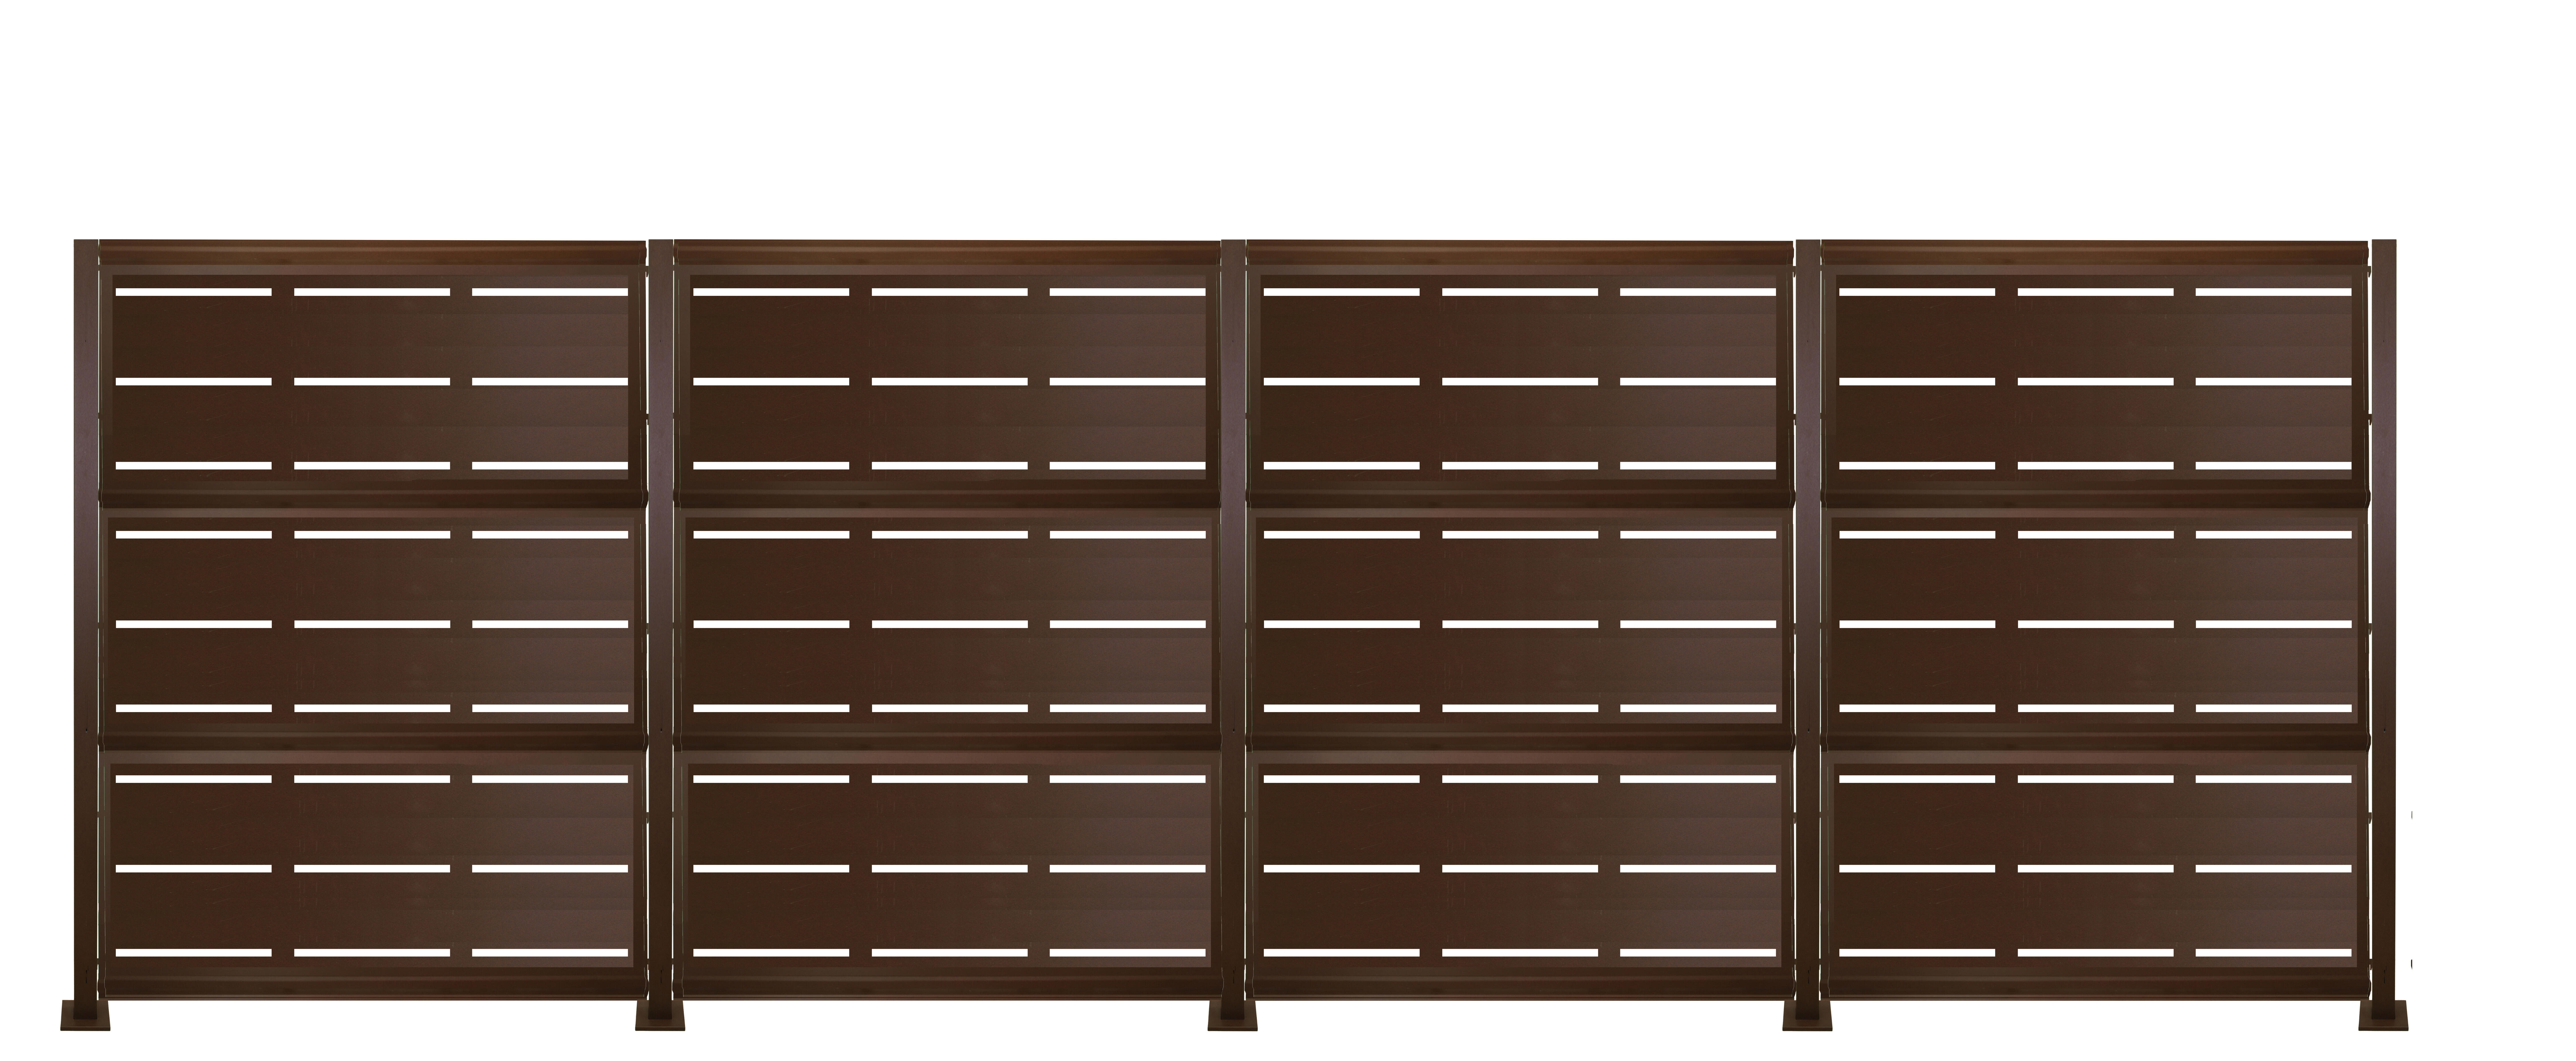 Kit valla de acero galvanizado rayas marrón forja 606x200x13 cm